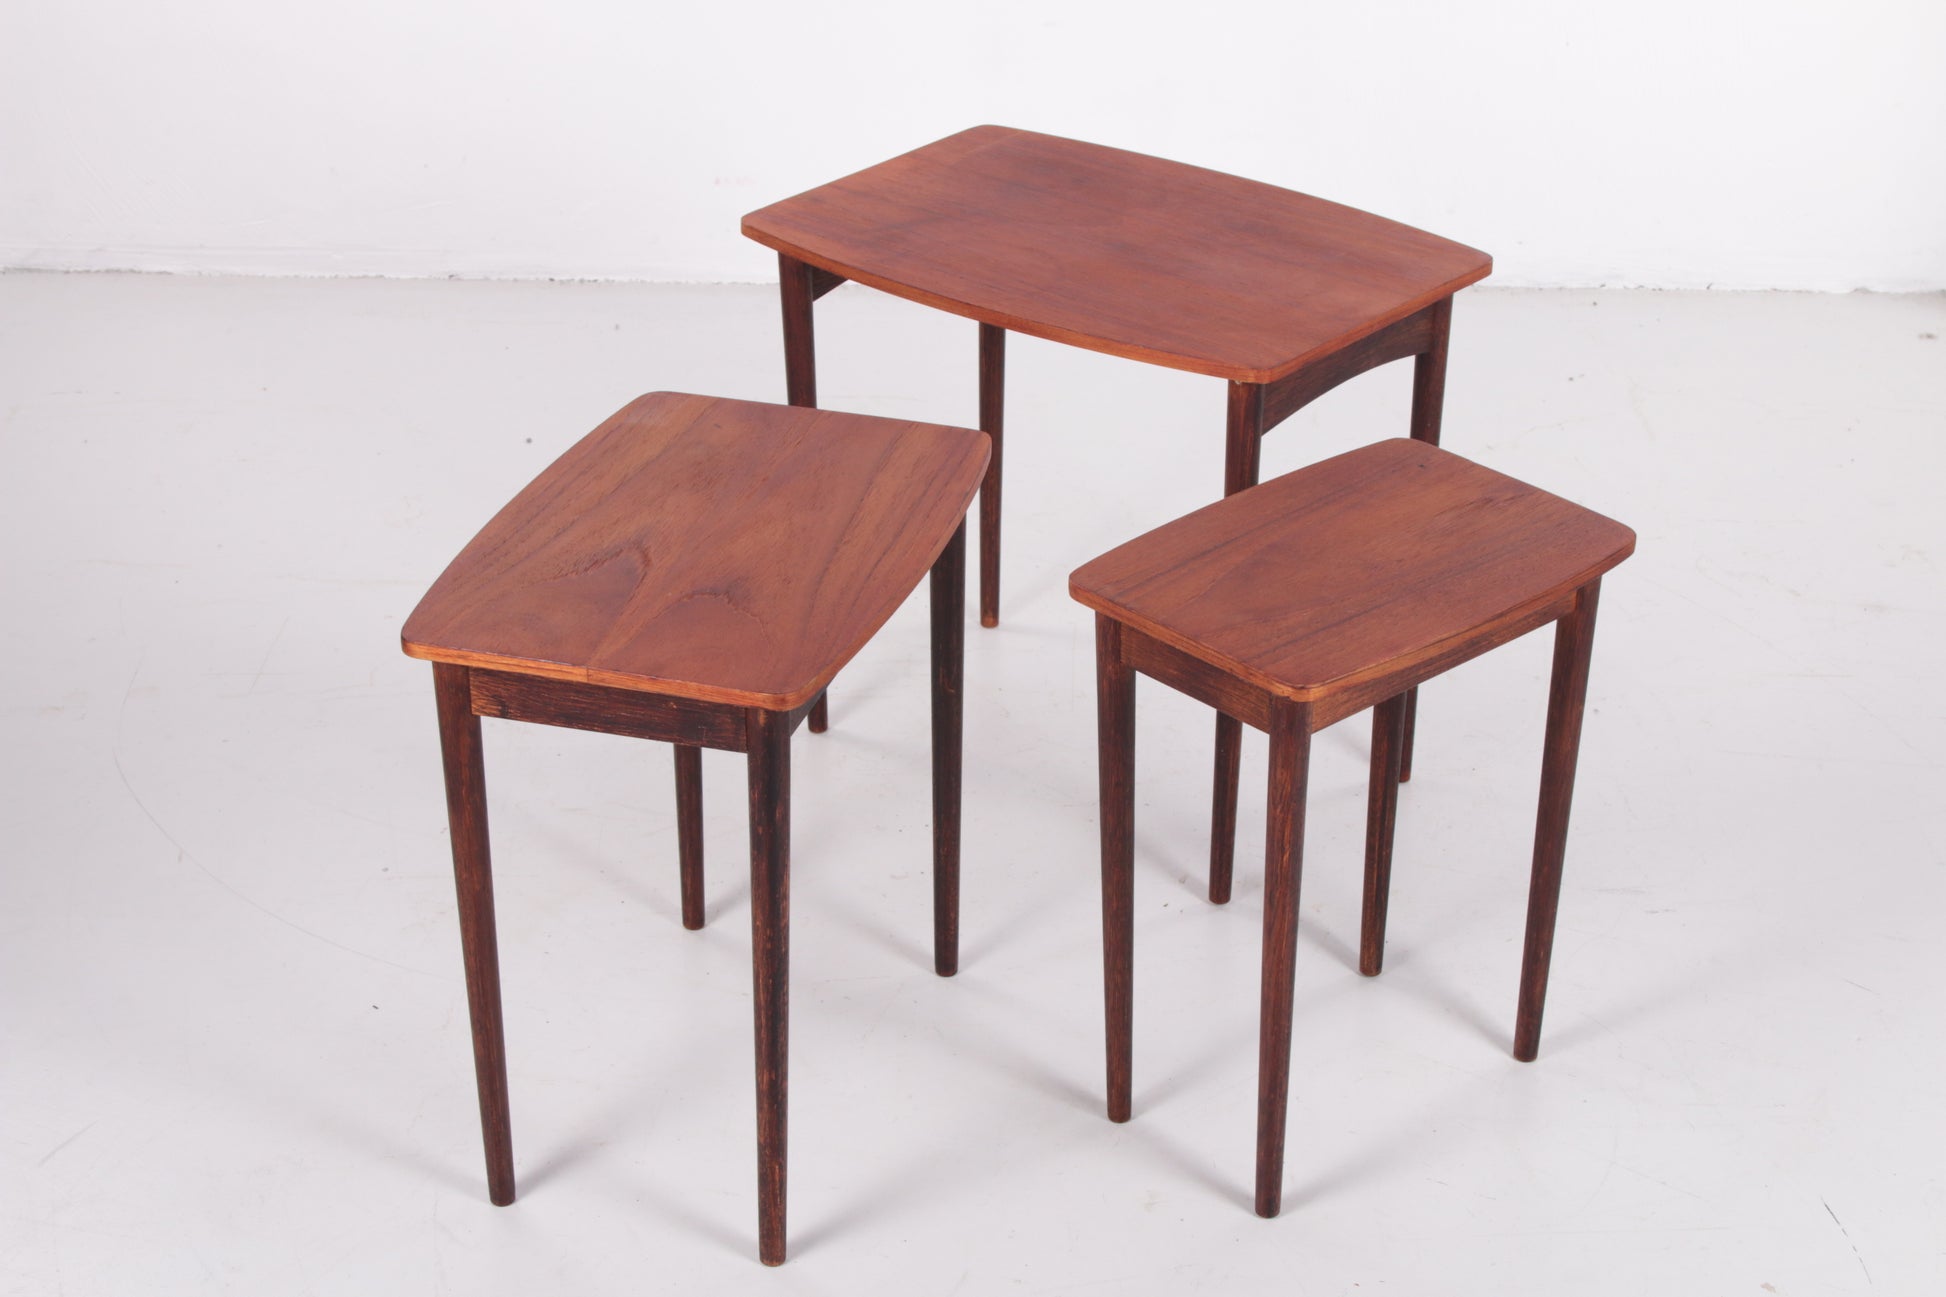 Vintage Deens design nesting tables mimiset bijzettafels van teak hout set bovenkant